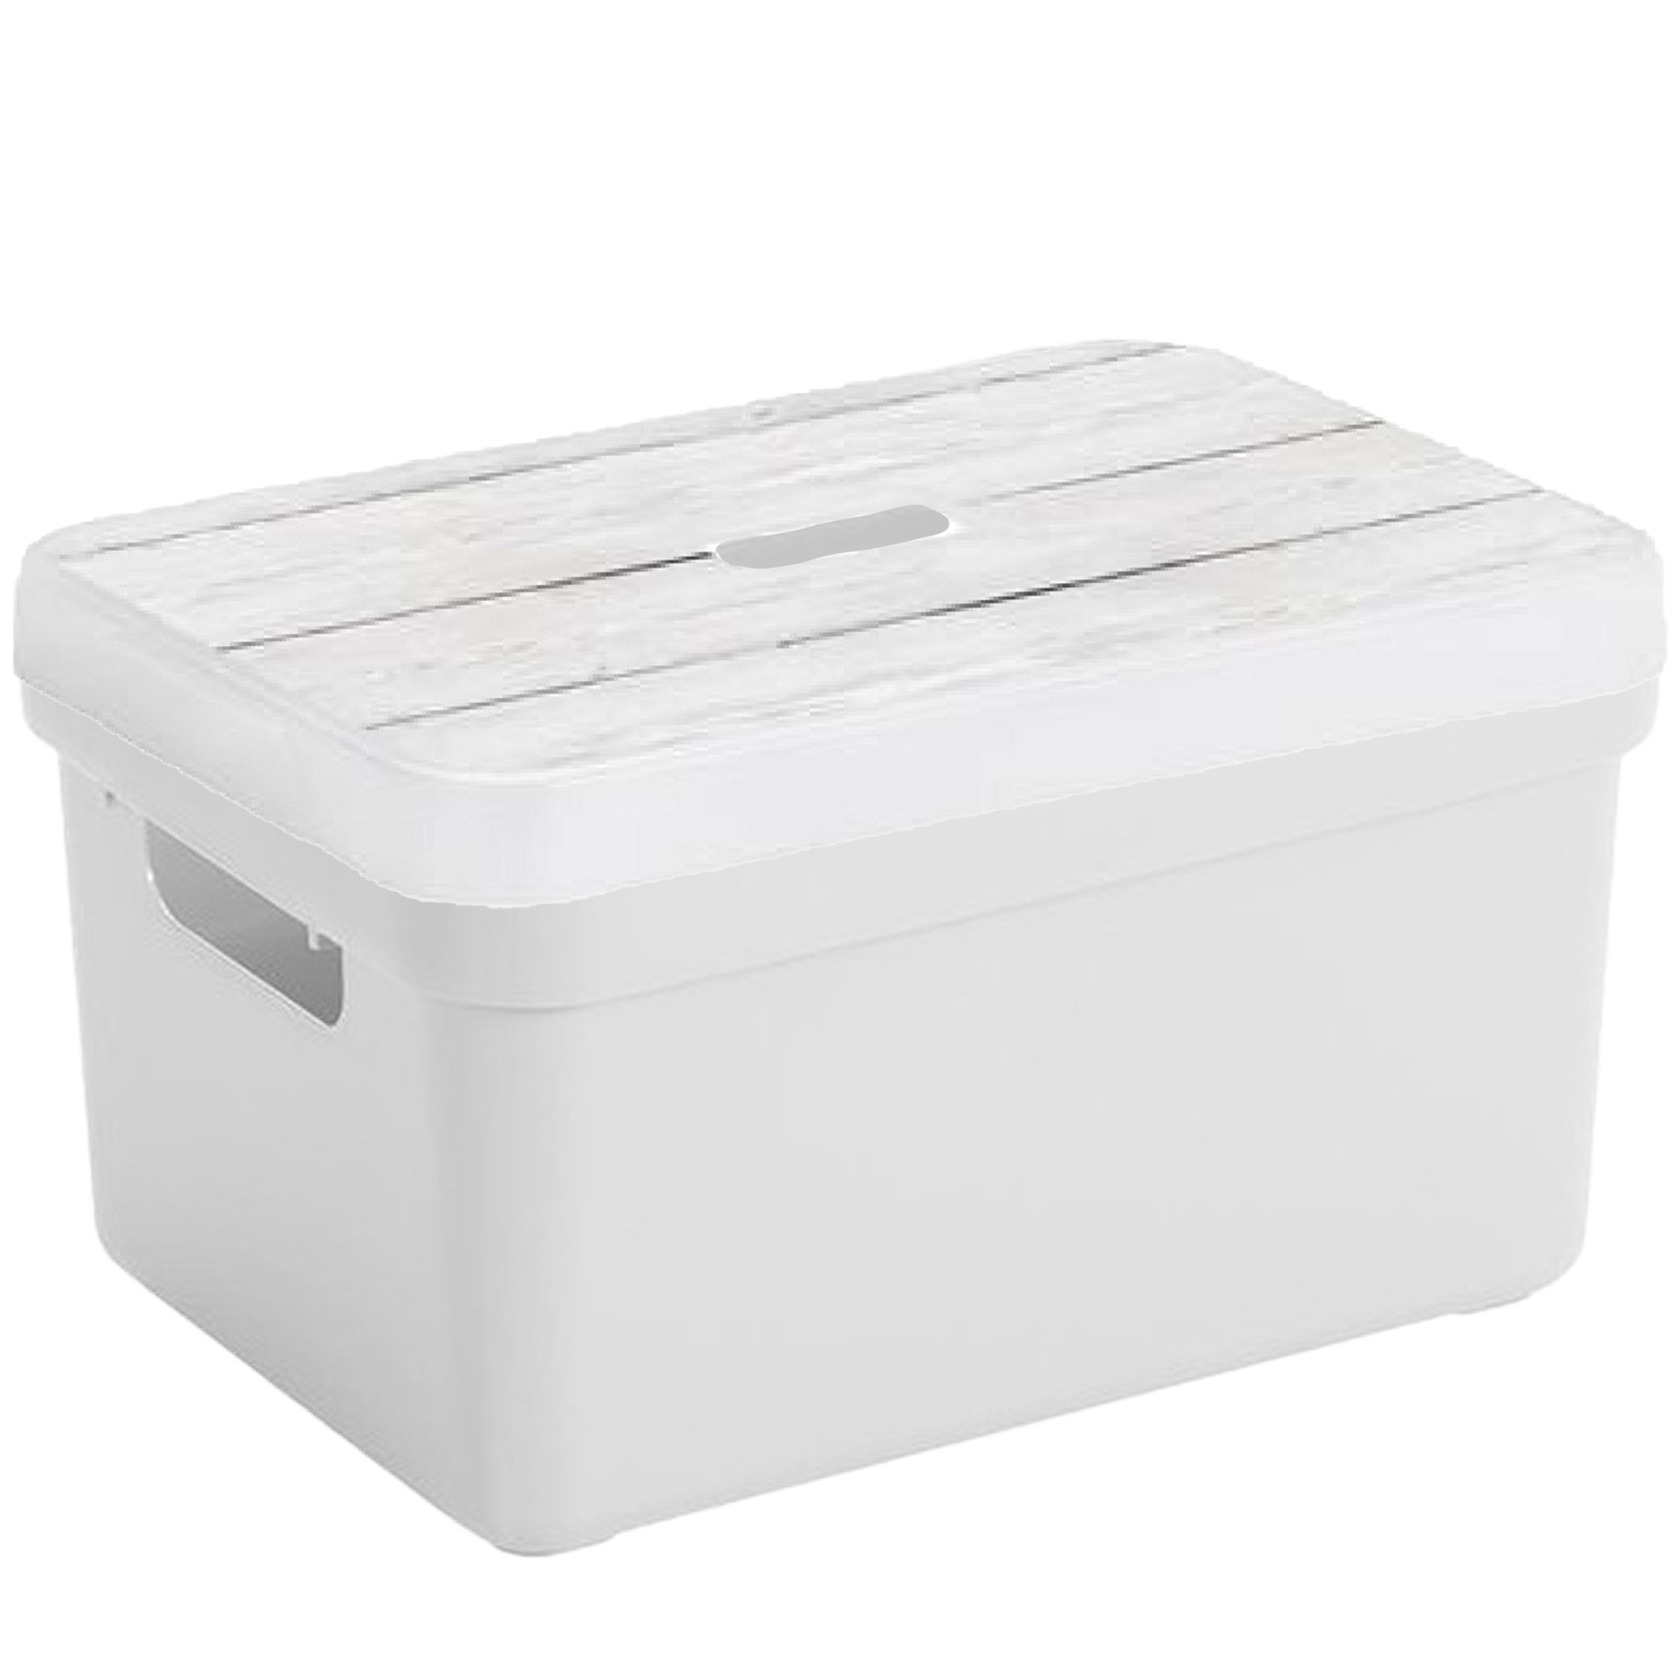 Opbergbox-mand wit 5 liter kunststof met deksel